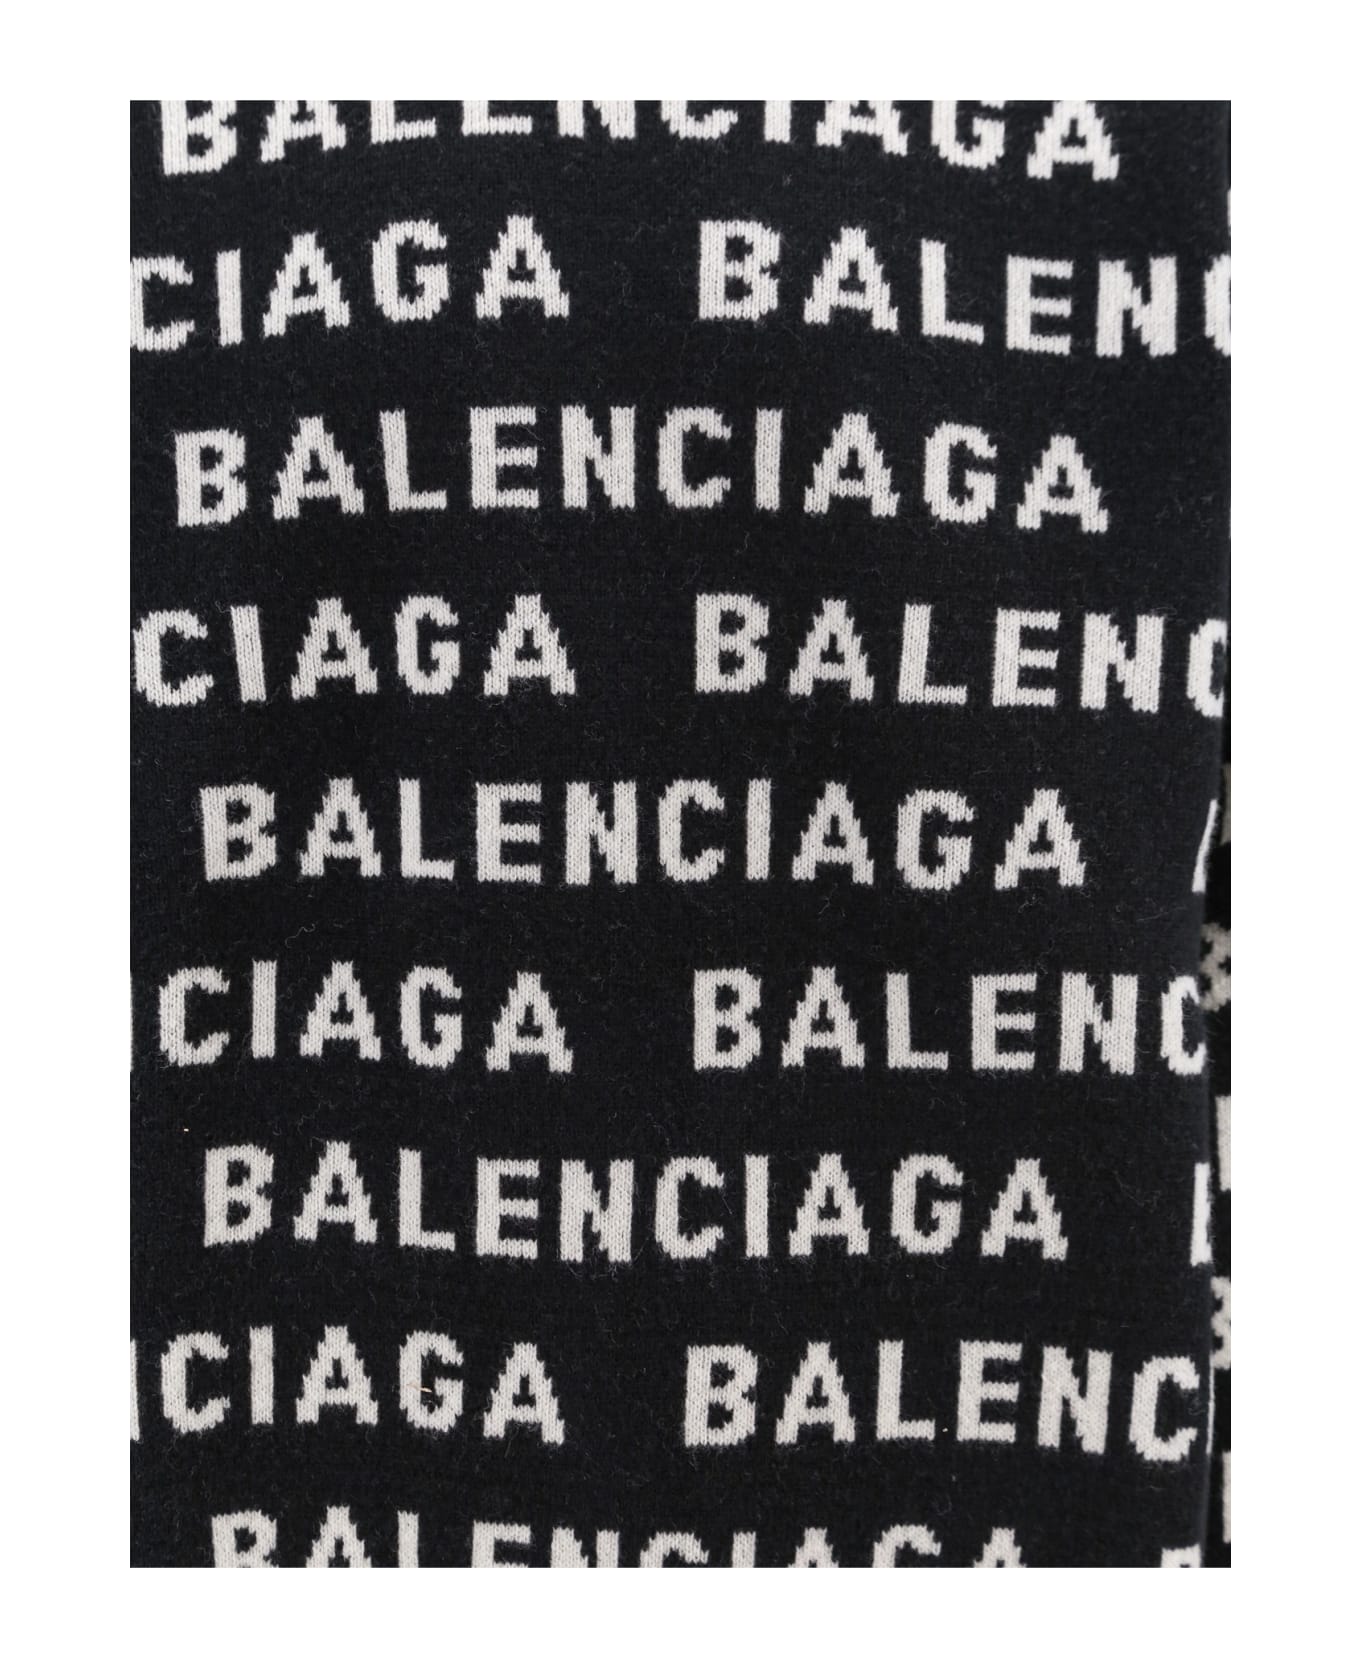 Balenciaga Sweater - Black/white